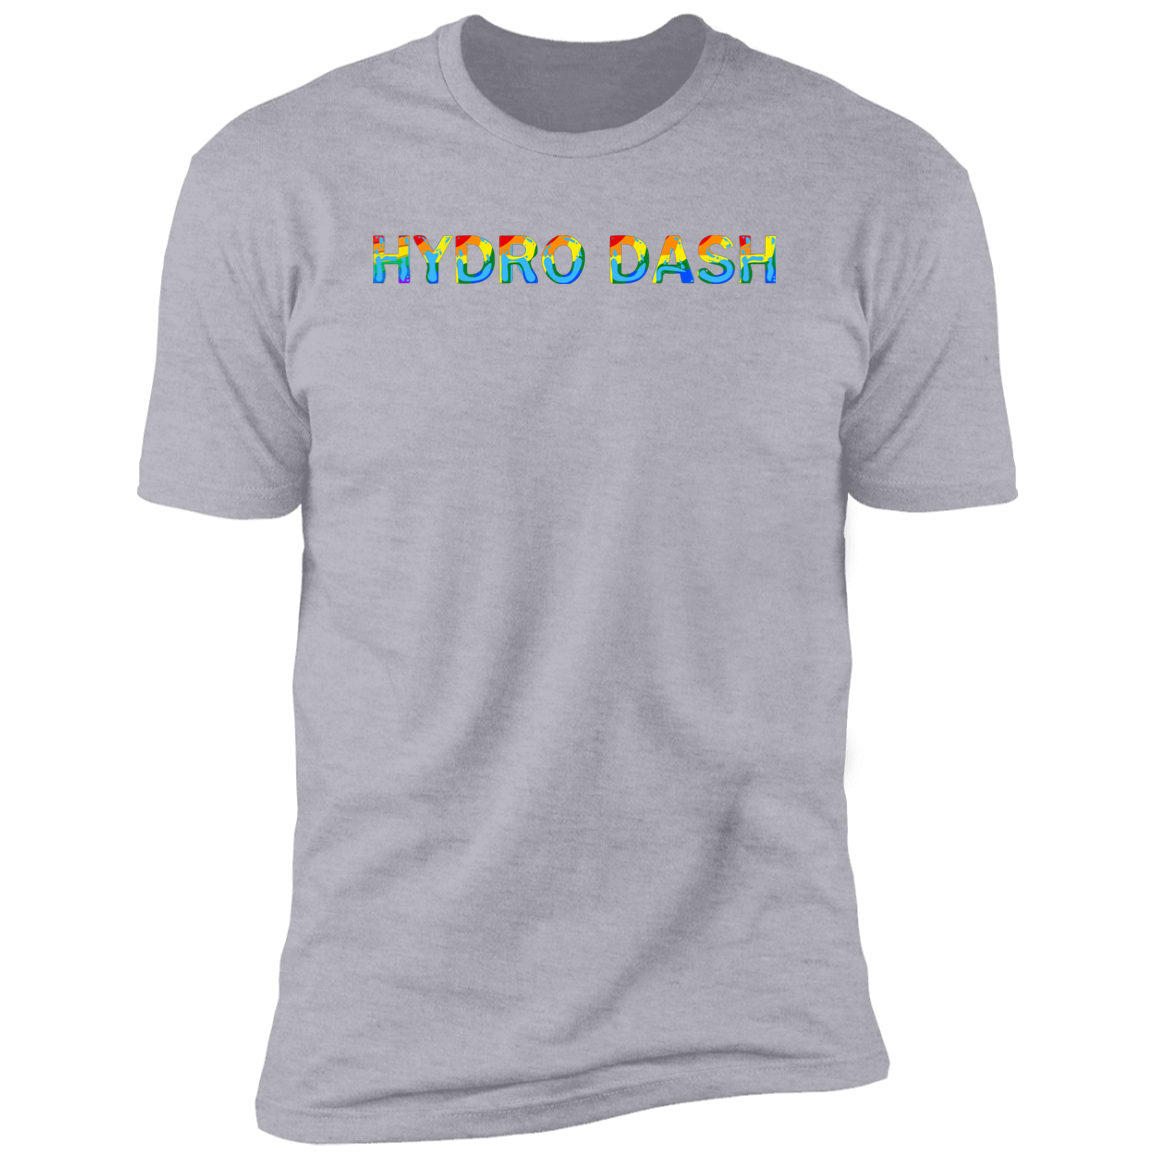  Hydro Dash Pride 2023  t-shirt, dog pride dog Hydro dash shirt for humans, in light heather gray